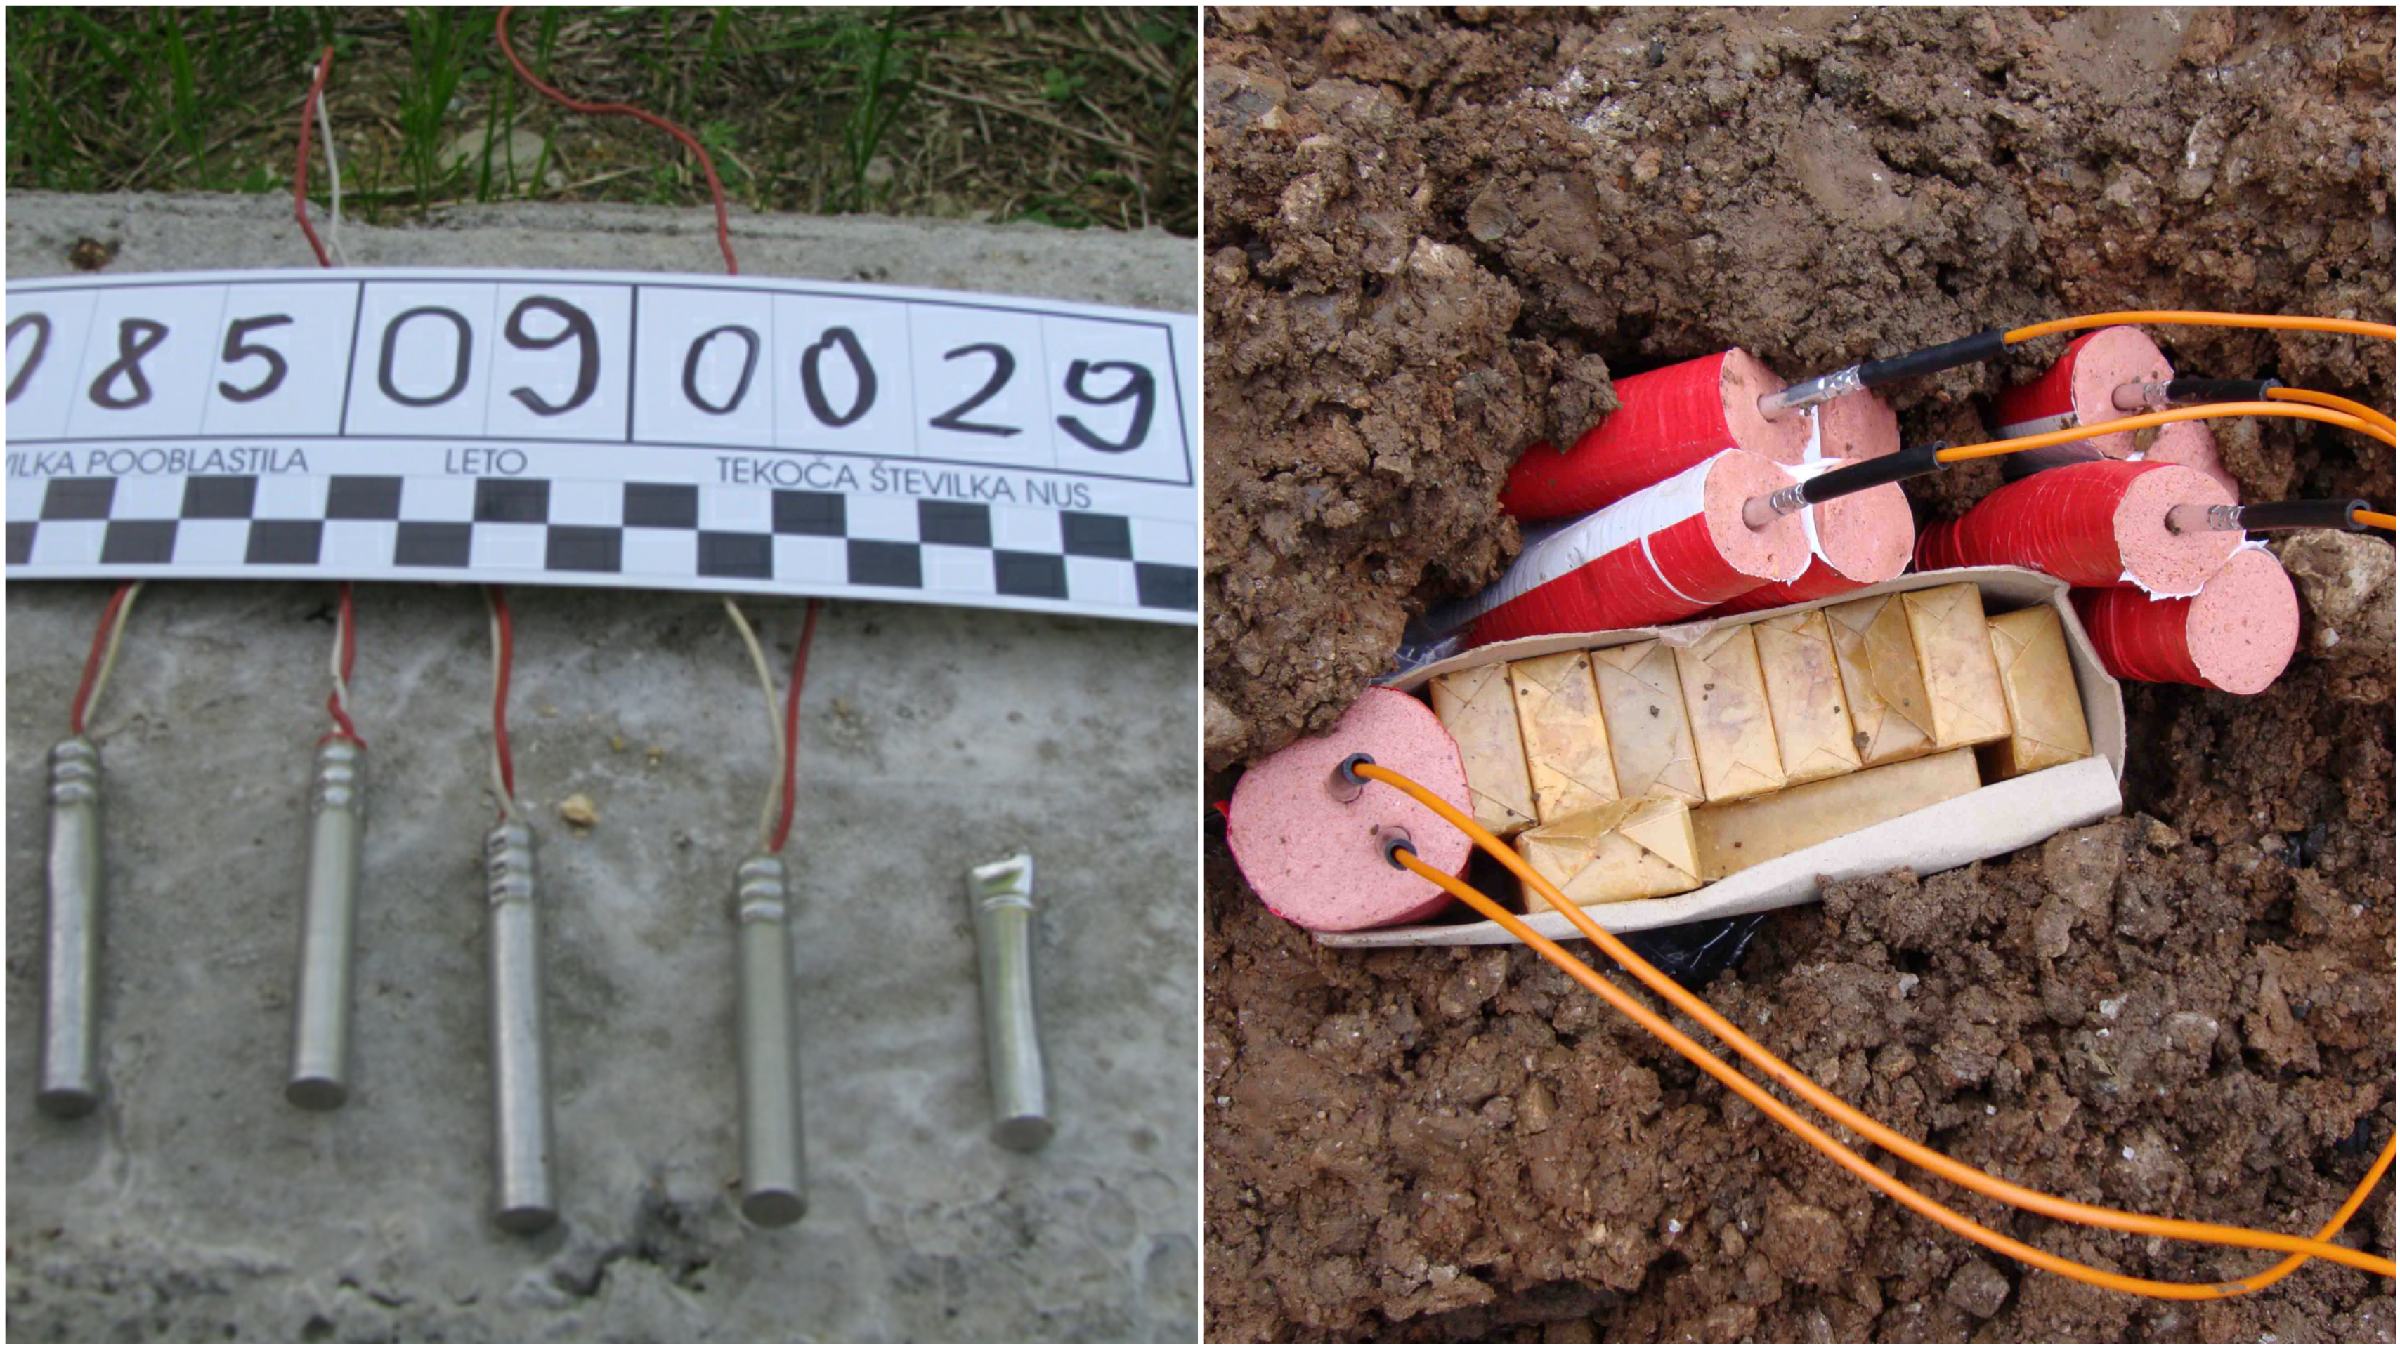 VIDEO: V Špičniku našli neeksplodirana ubojna sredstva